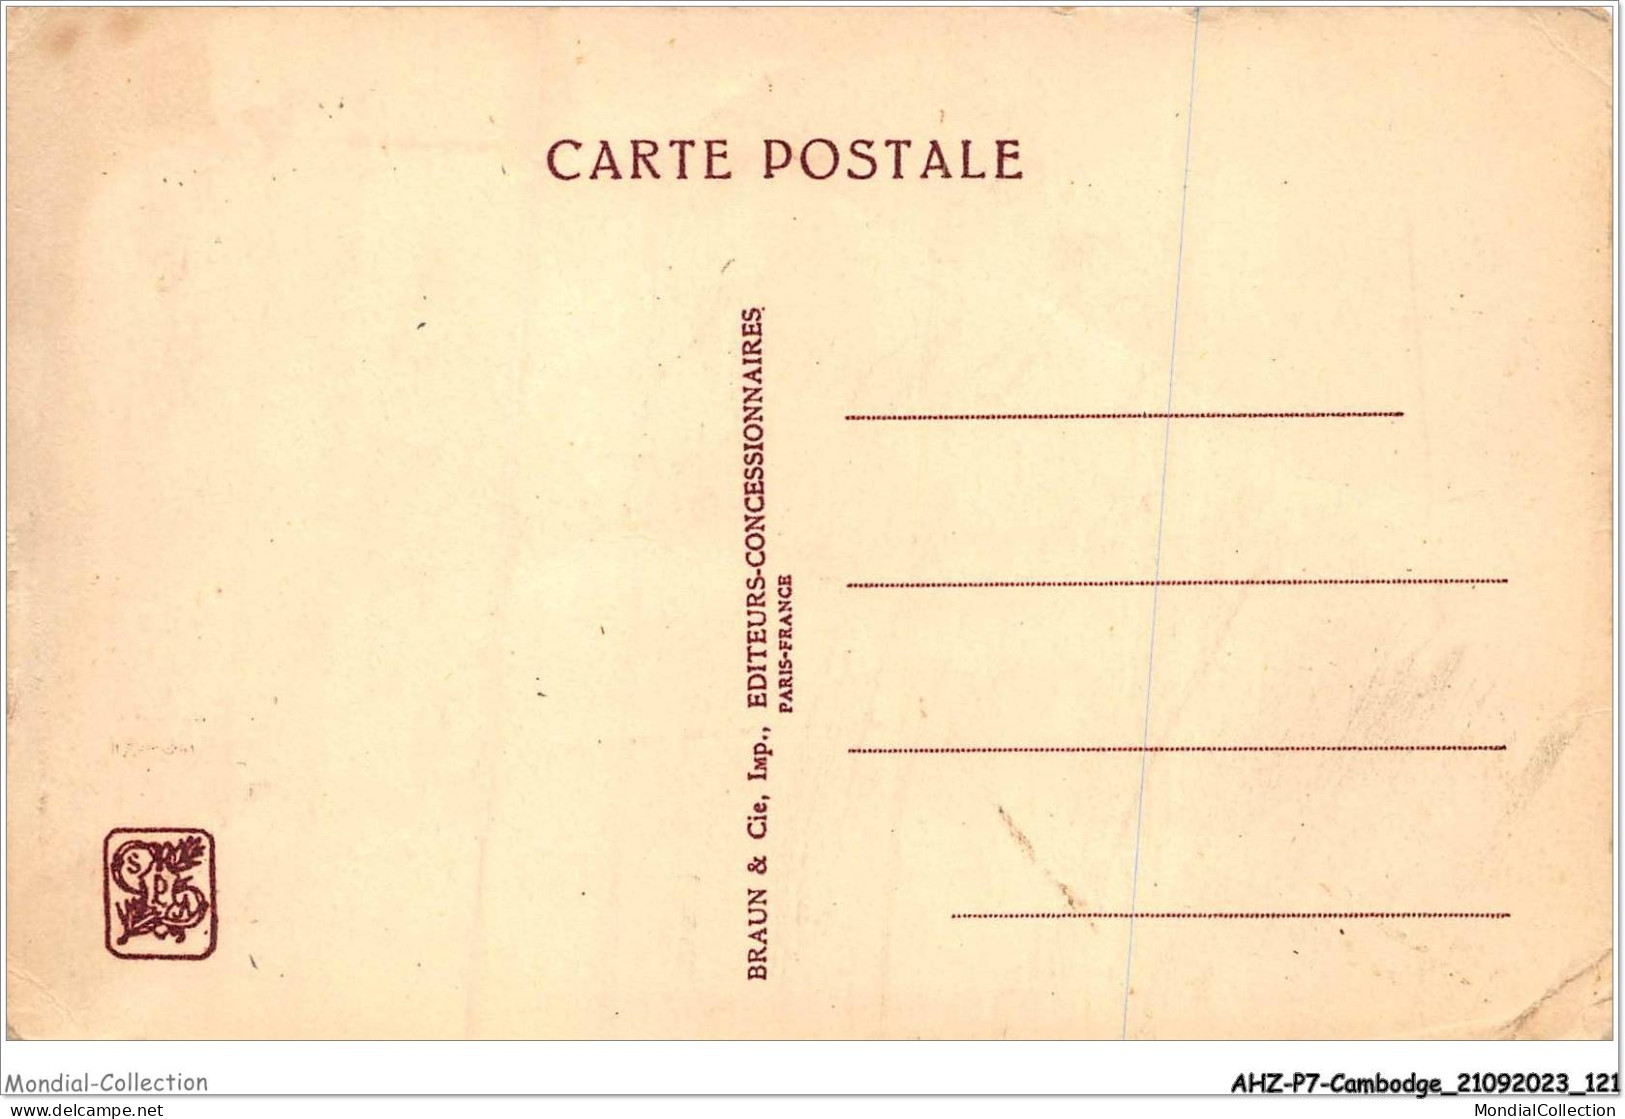 AHZP7-CAMBODGE-0656 - EXPOSITION COLONIALE INTERNATIONALE - PARIS 1931 - ANGKOR-VAT - FACADE PRINCIPALE - Cambodia